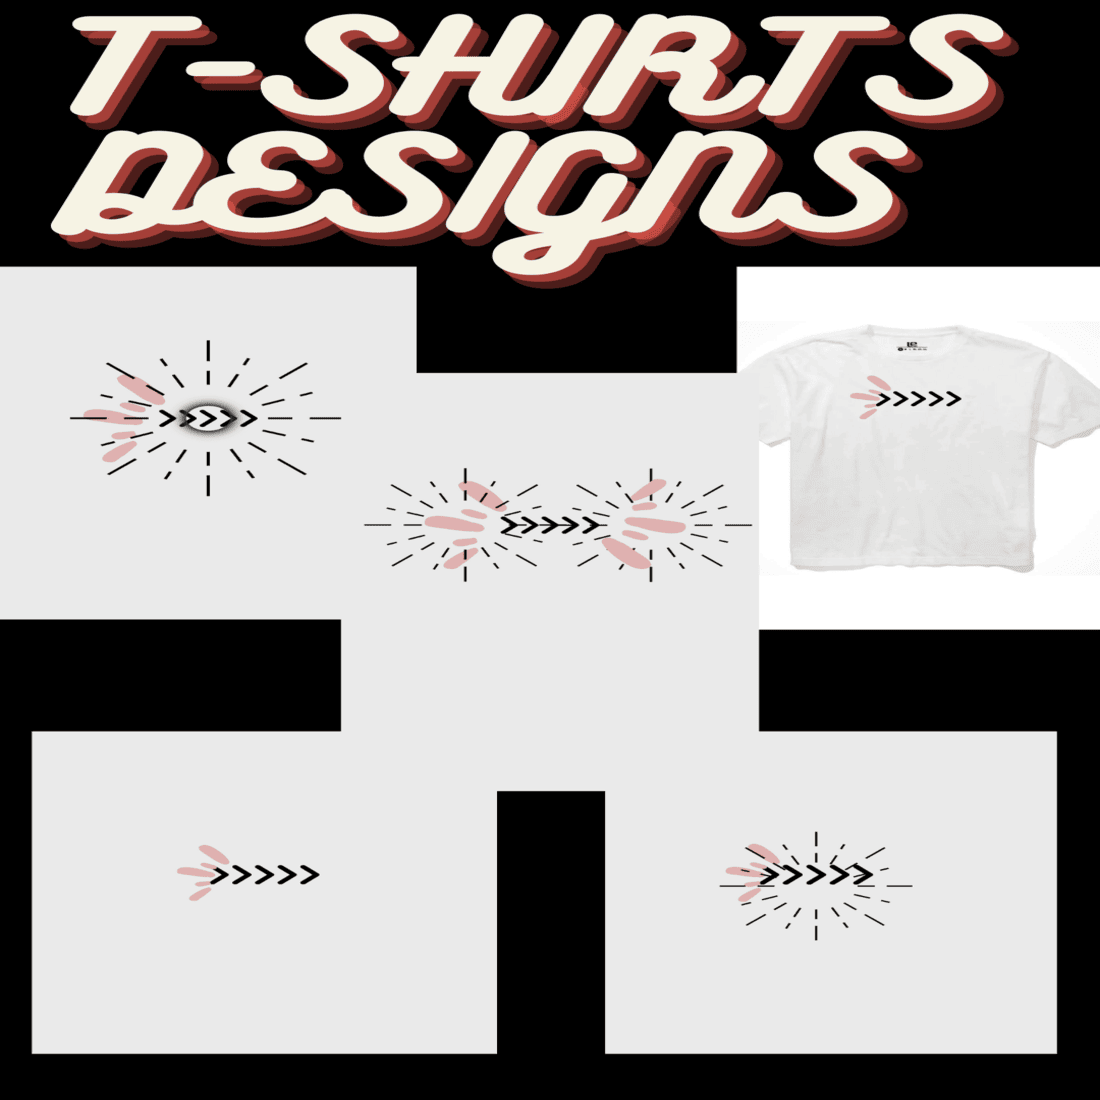 T-SHIRT DESIGNS |ABSTRACT DESIGNS |UNIQUE ELEMENTS preview image.